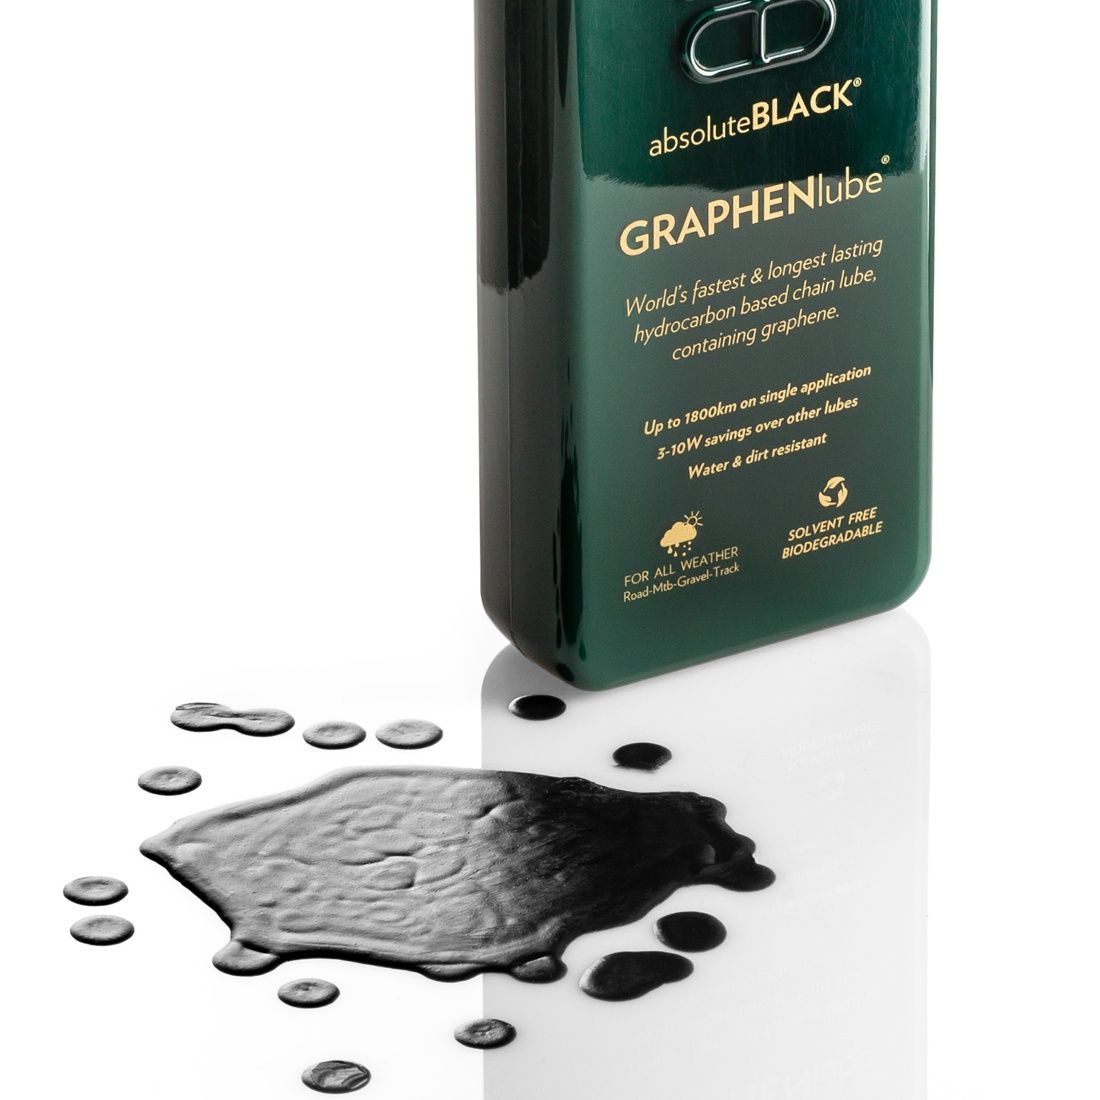 Graphene lube worlds best graphene based wax chain lubricant